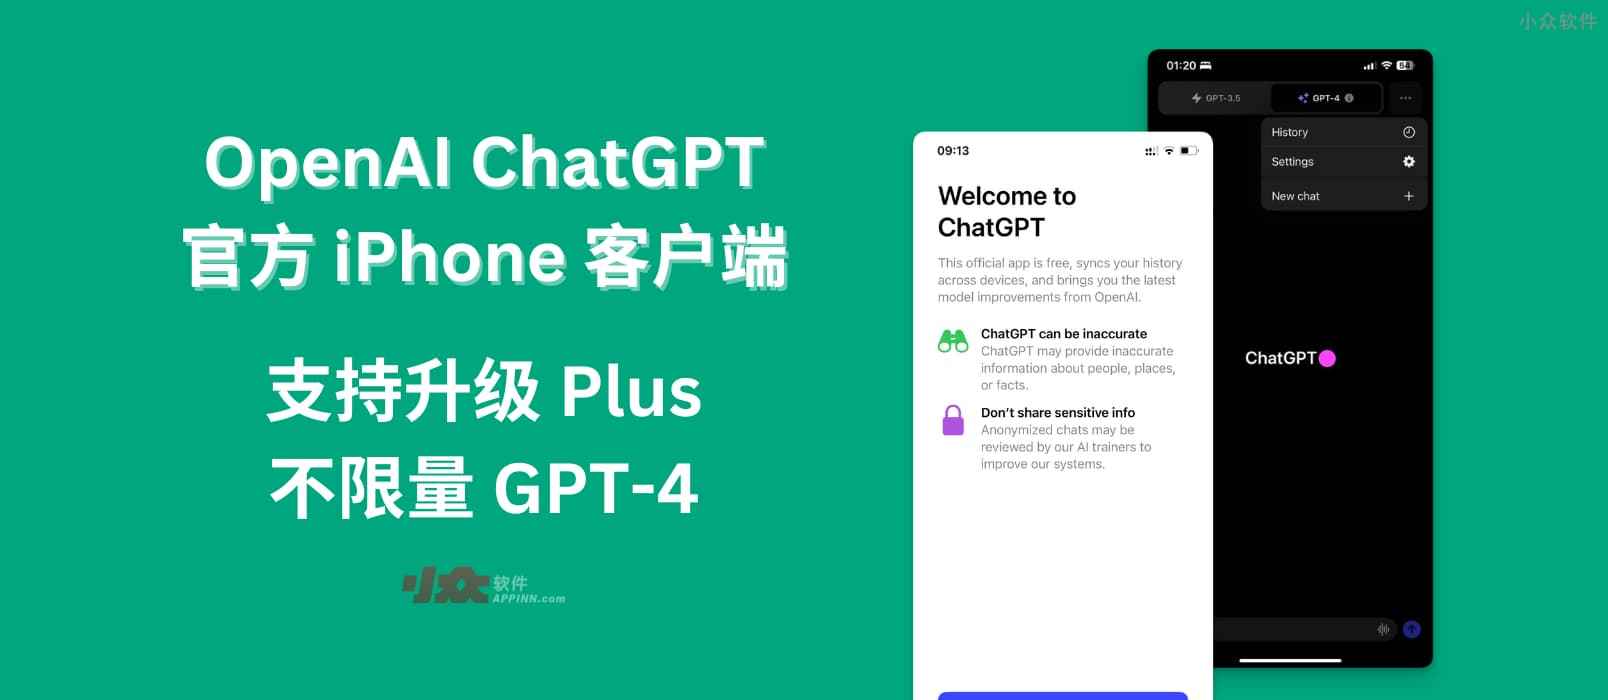 OpenAI ChatGPT 官方 iPhone 客户端发布，支持升级 Plus，不限量 GPT-4